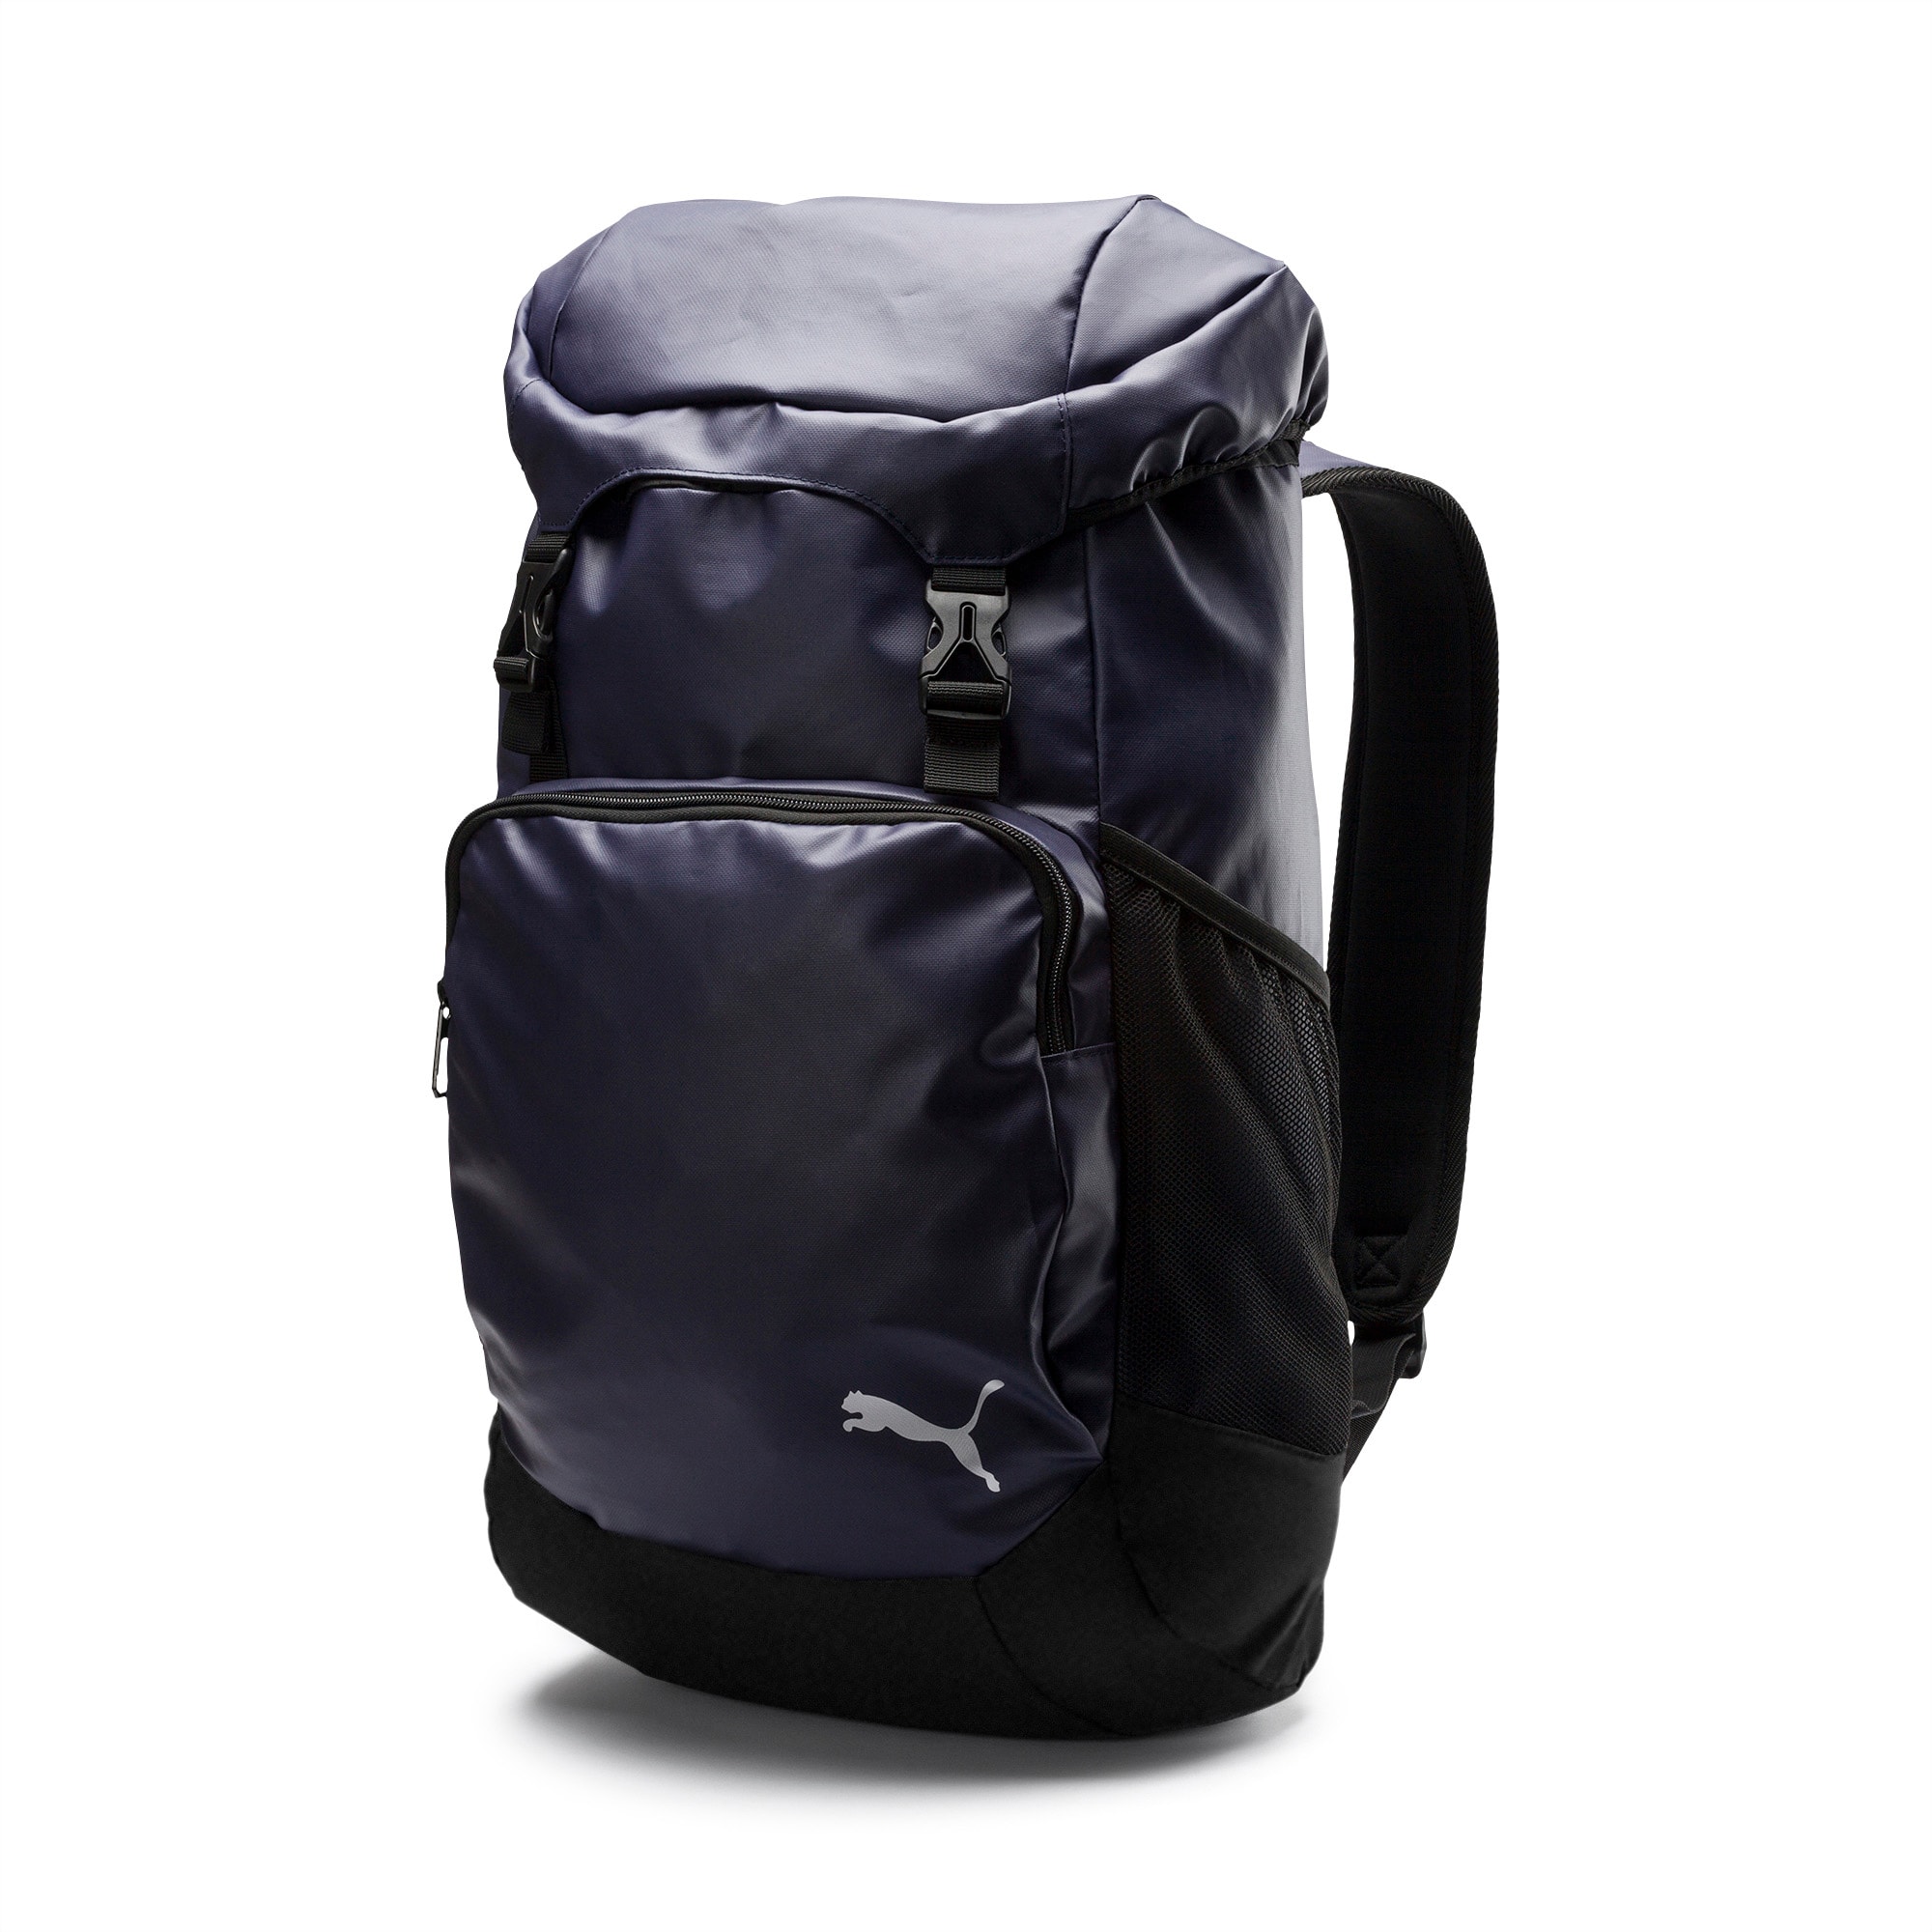 puma final pro backpack